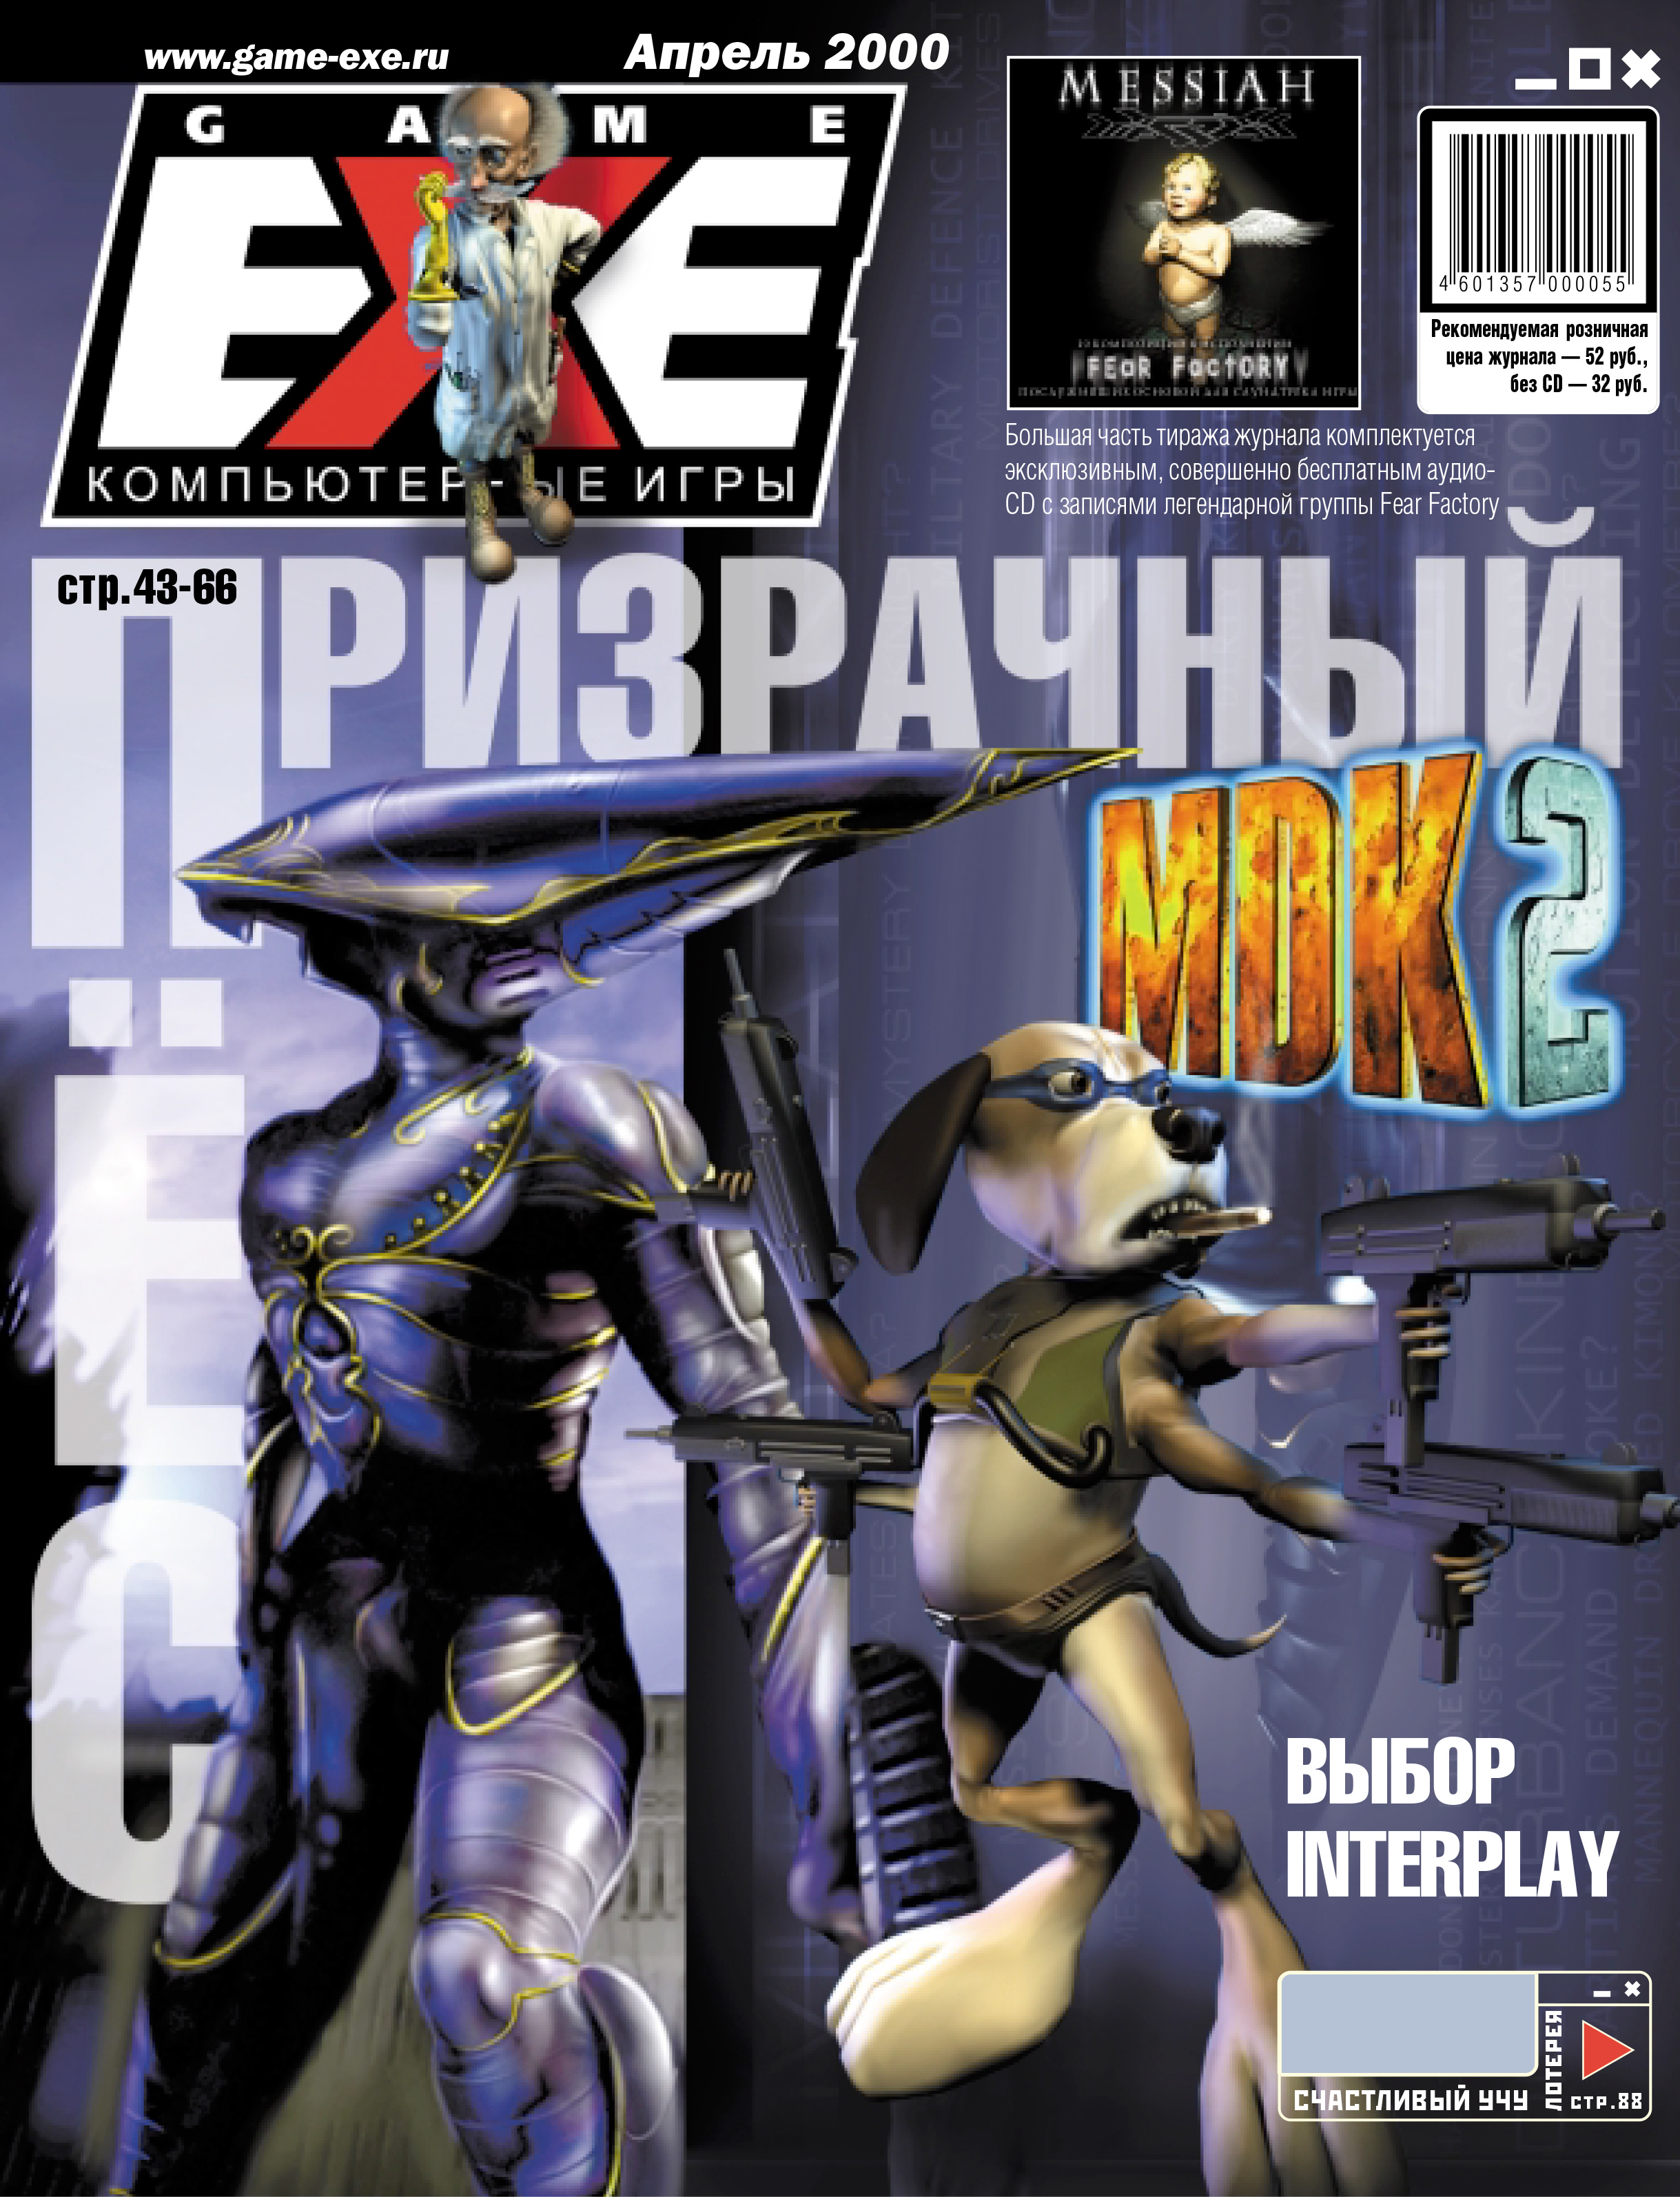 Download game exe. Журнал гейм ехе. Game exe журнал. Game exe 2000. Game exe 2003.